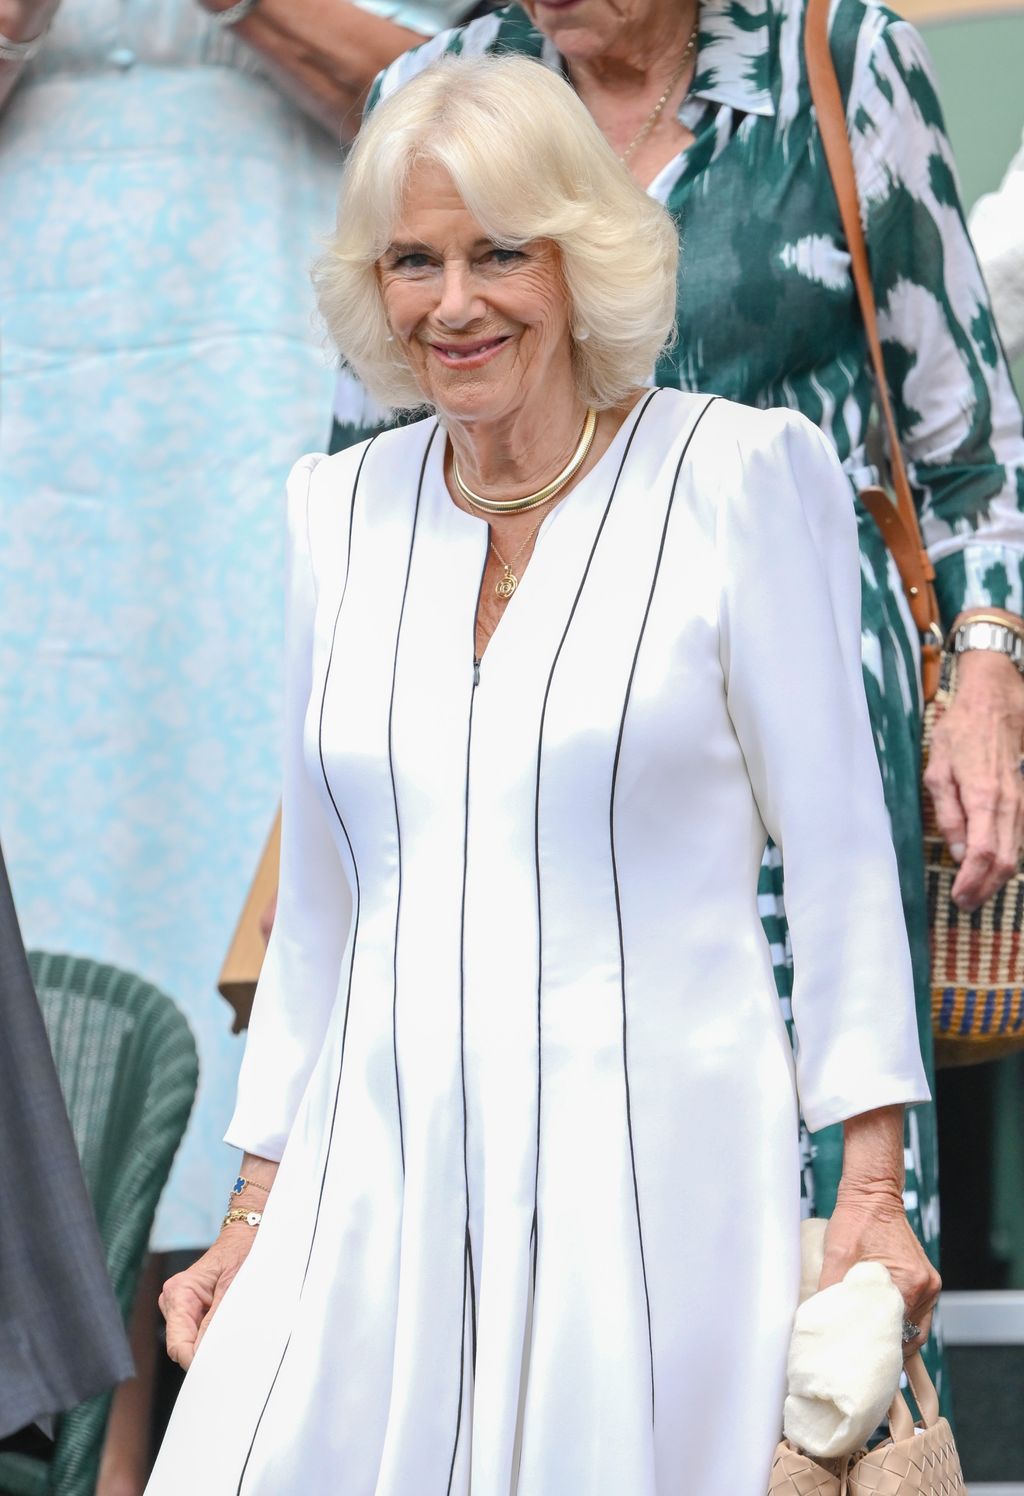 Queen Camilla at Wimbledon in a white dress